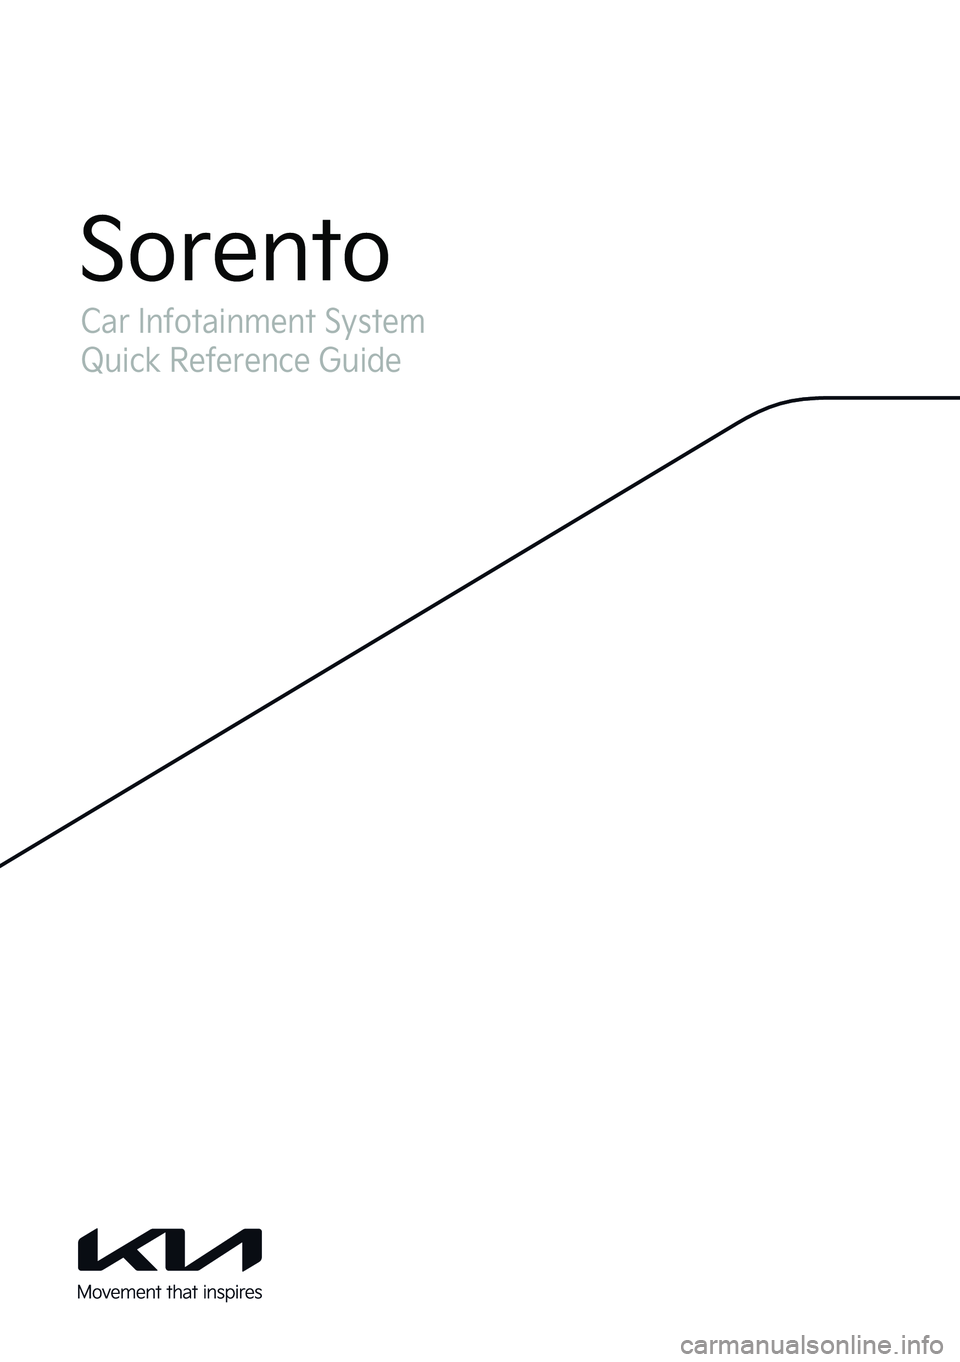 KIA SORENTO 2022  Navigation System Quick Reference Guide Car Infotainment System
Quick Reference Guide
Sorento  